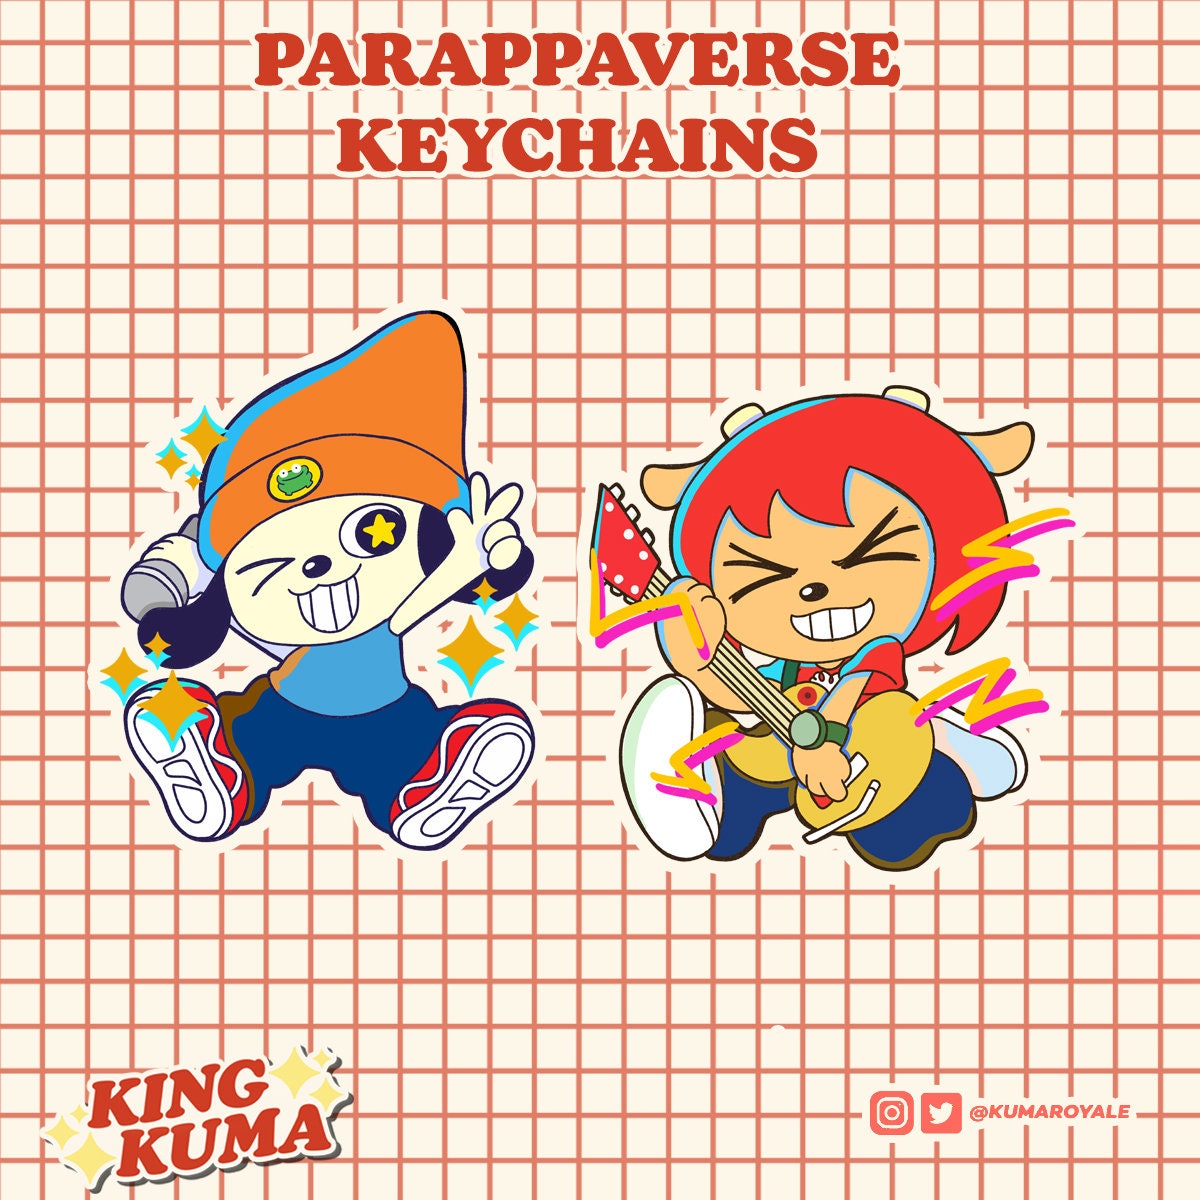 PARAPPA THE RAPPER 3 Pick Keychain Japan Kawaii Anime